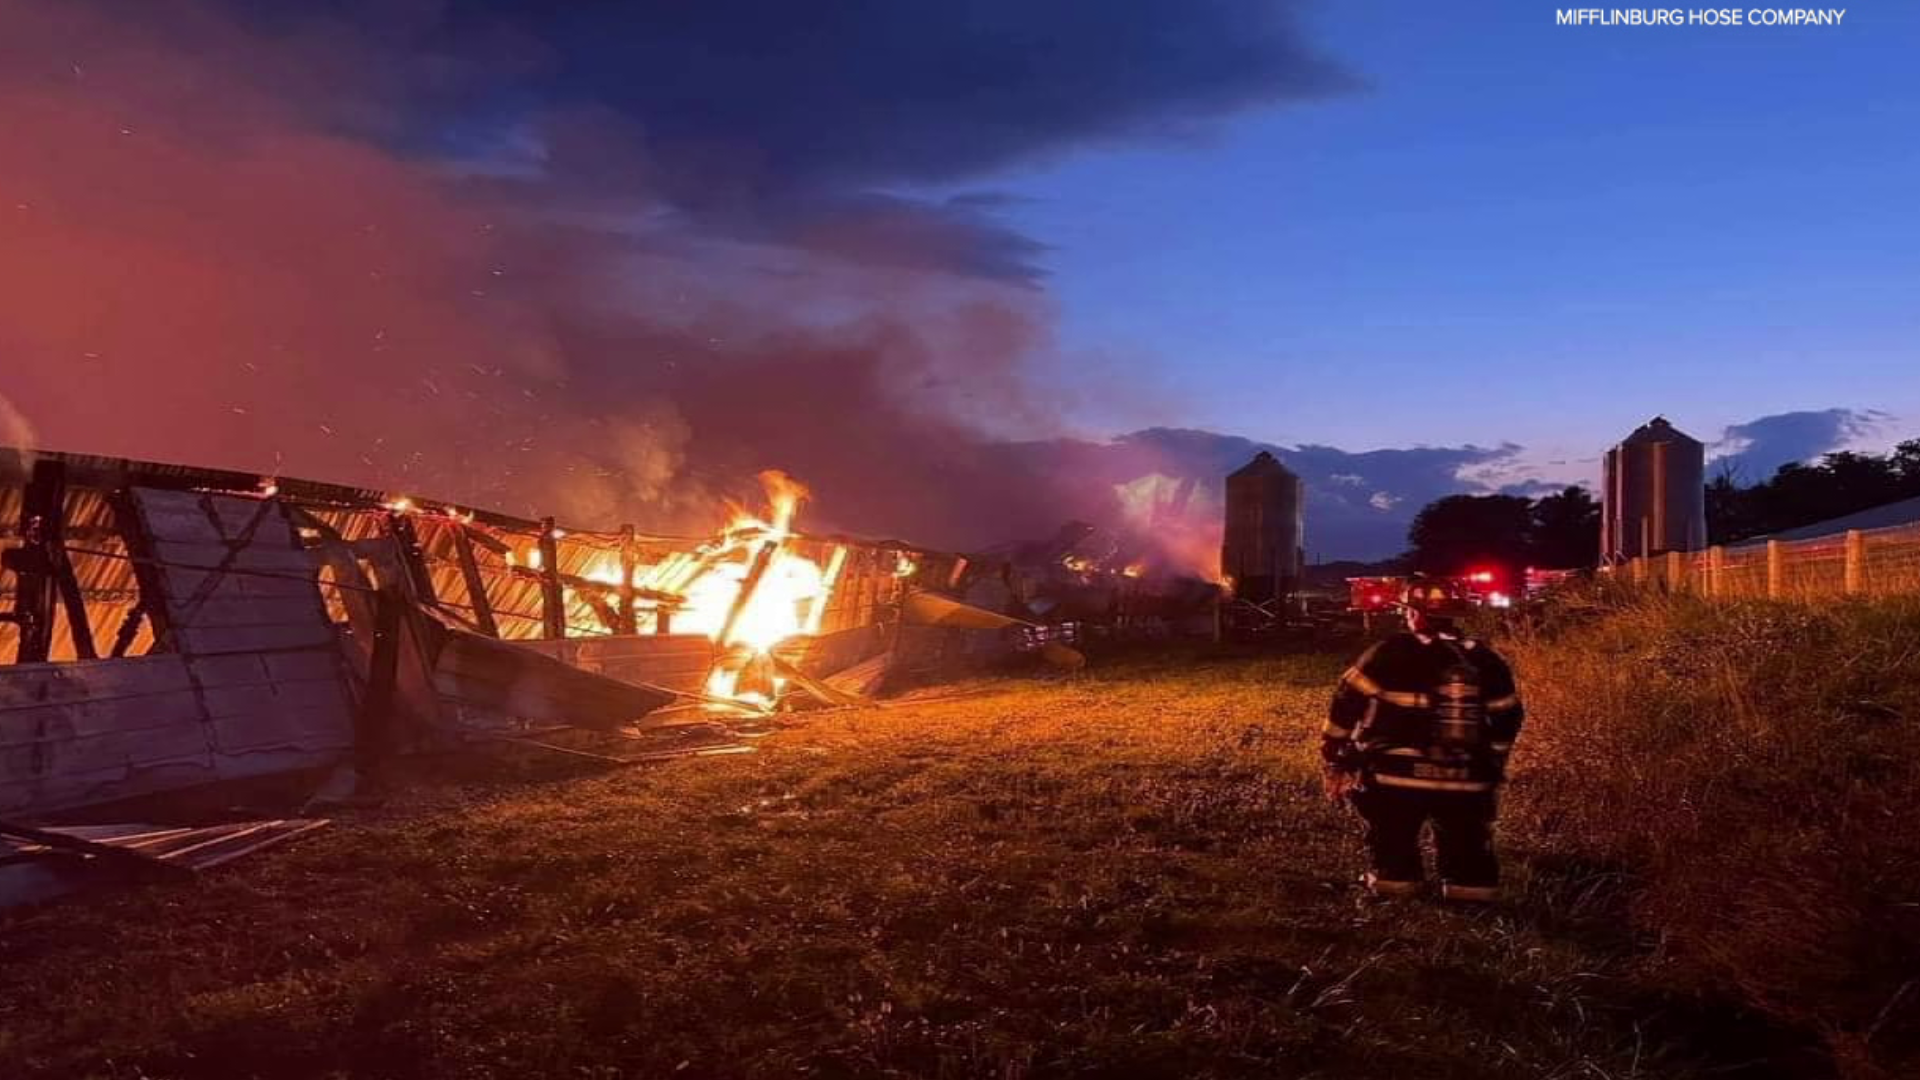 The barn caught fire just after 7 p.m. at a barn near Mifflinburg.